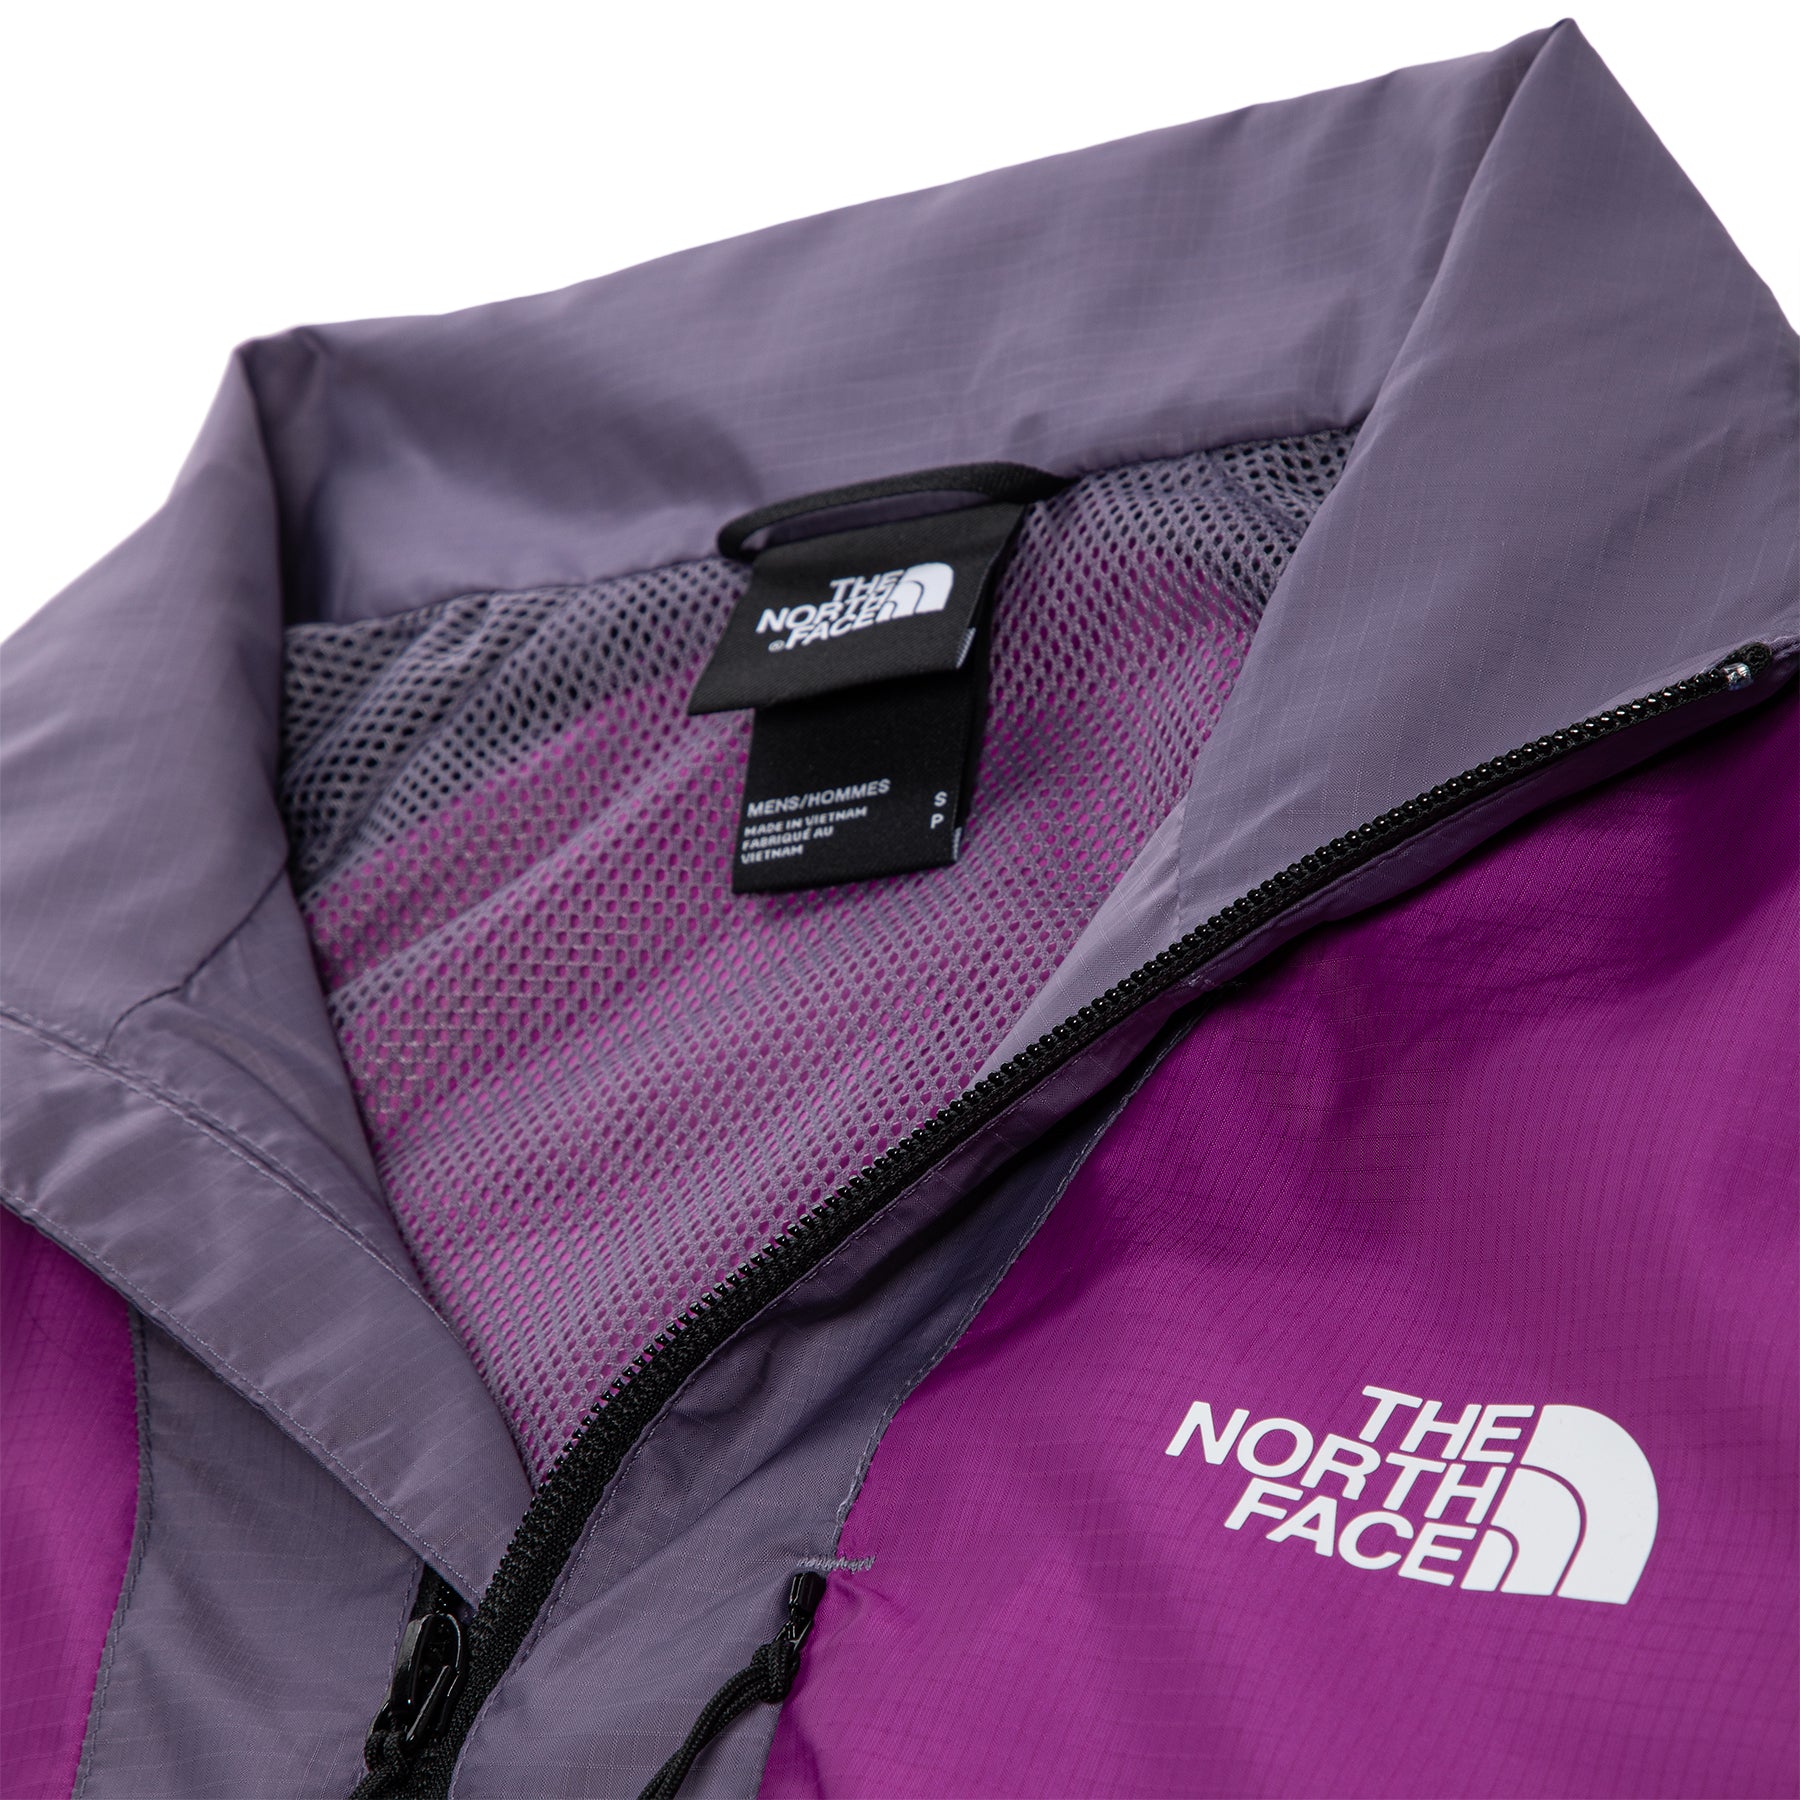 The North Face TNF™ X Jacket (Lunar Slate/Purple Cactus Flower/TNF